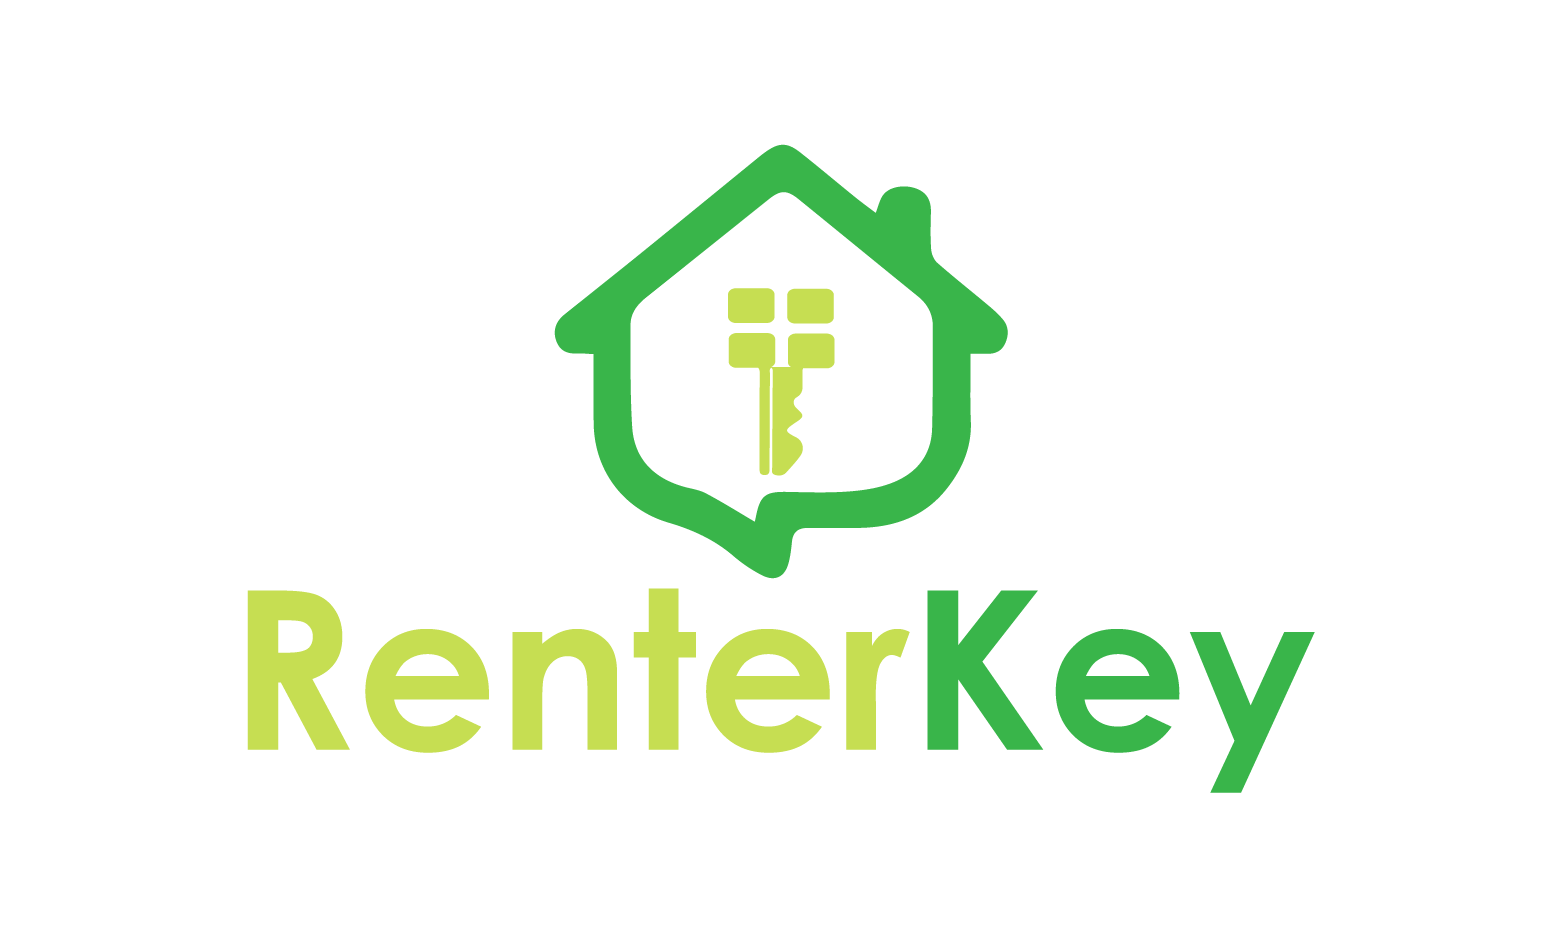 RenterKey.com - Creative brandable domain for sale